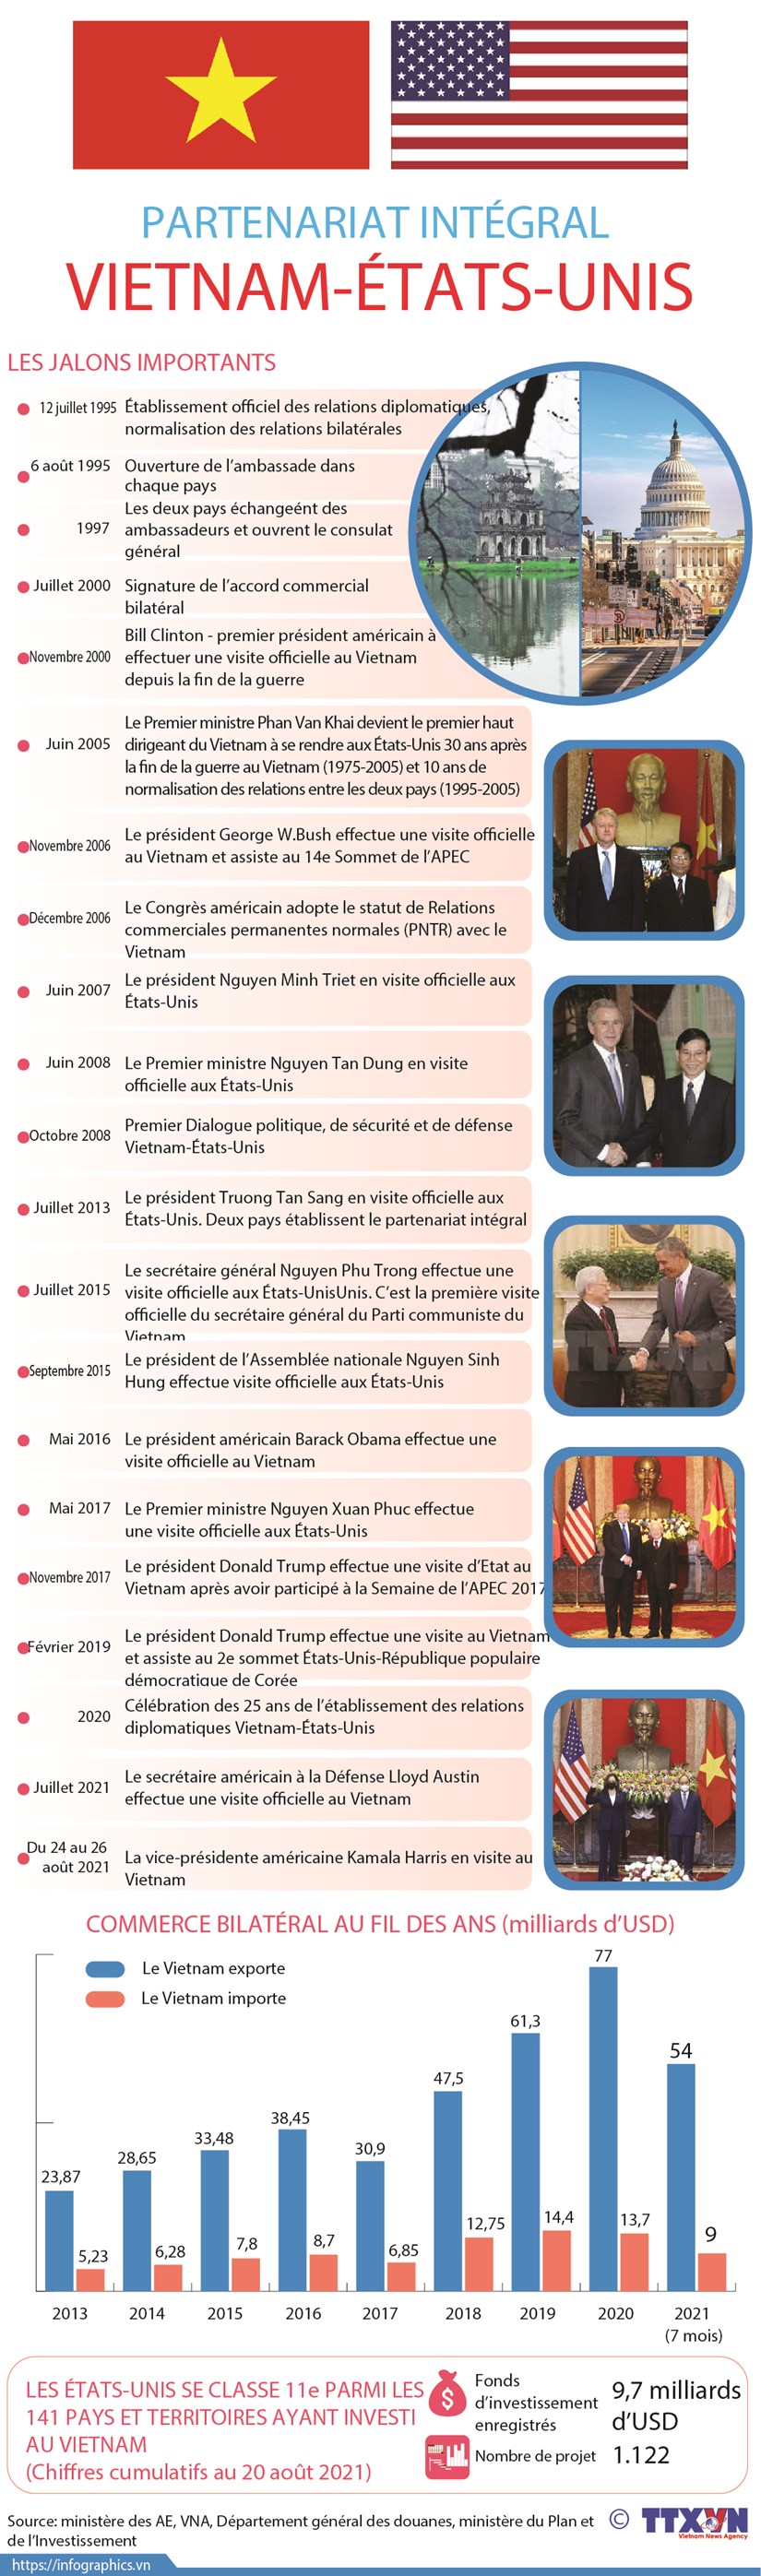 Partenariat Vietnam-Etats-Unis hinh anh 1